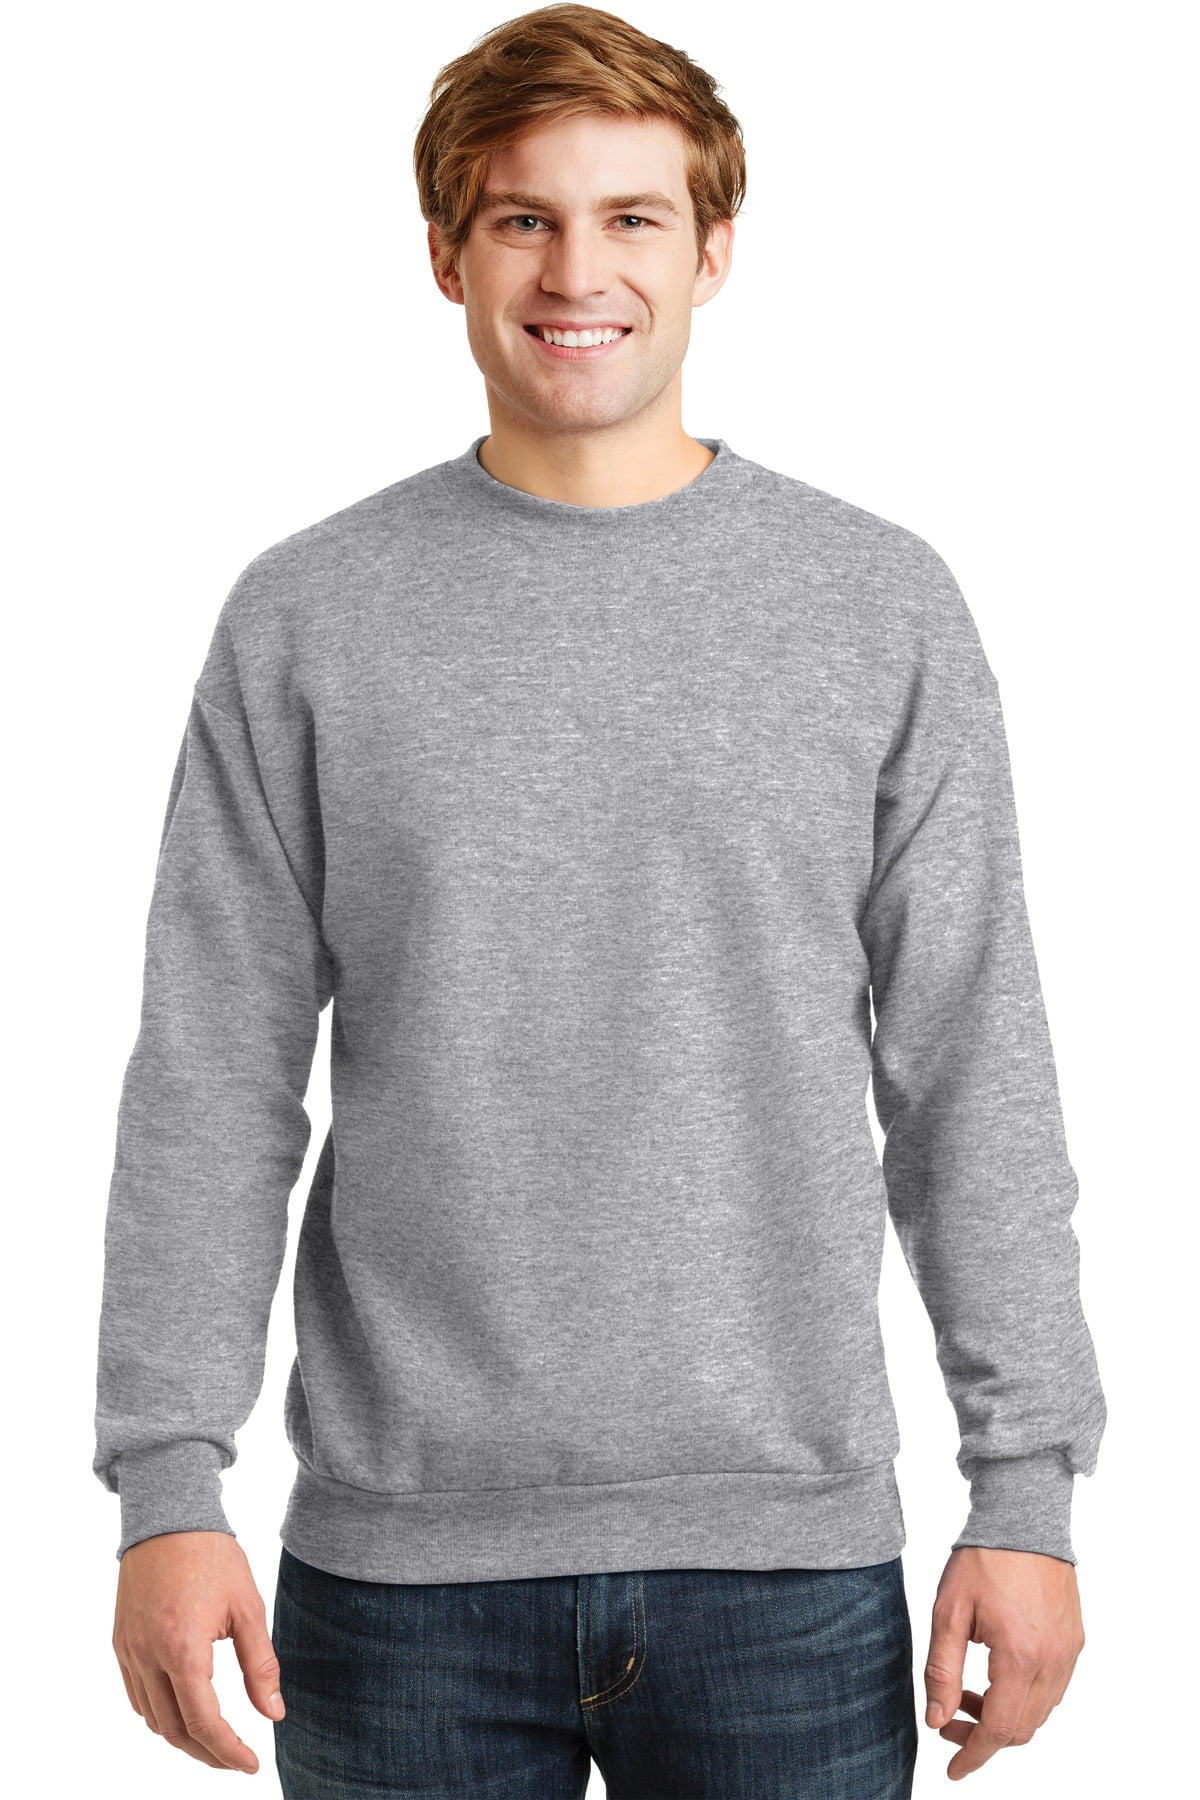 Hanes Men's Long Sleeve Crewneck Sweatshirt - P160 - Walmart.com